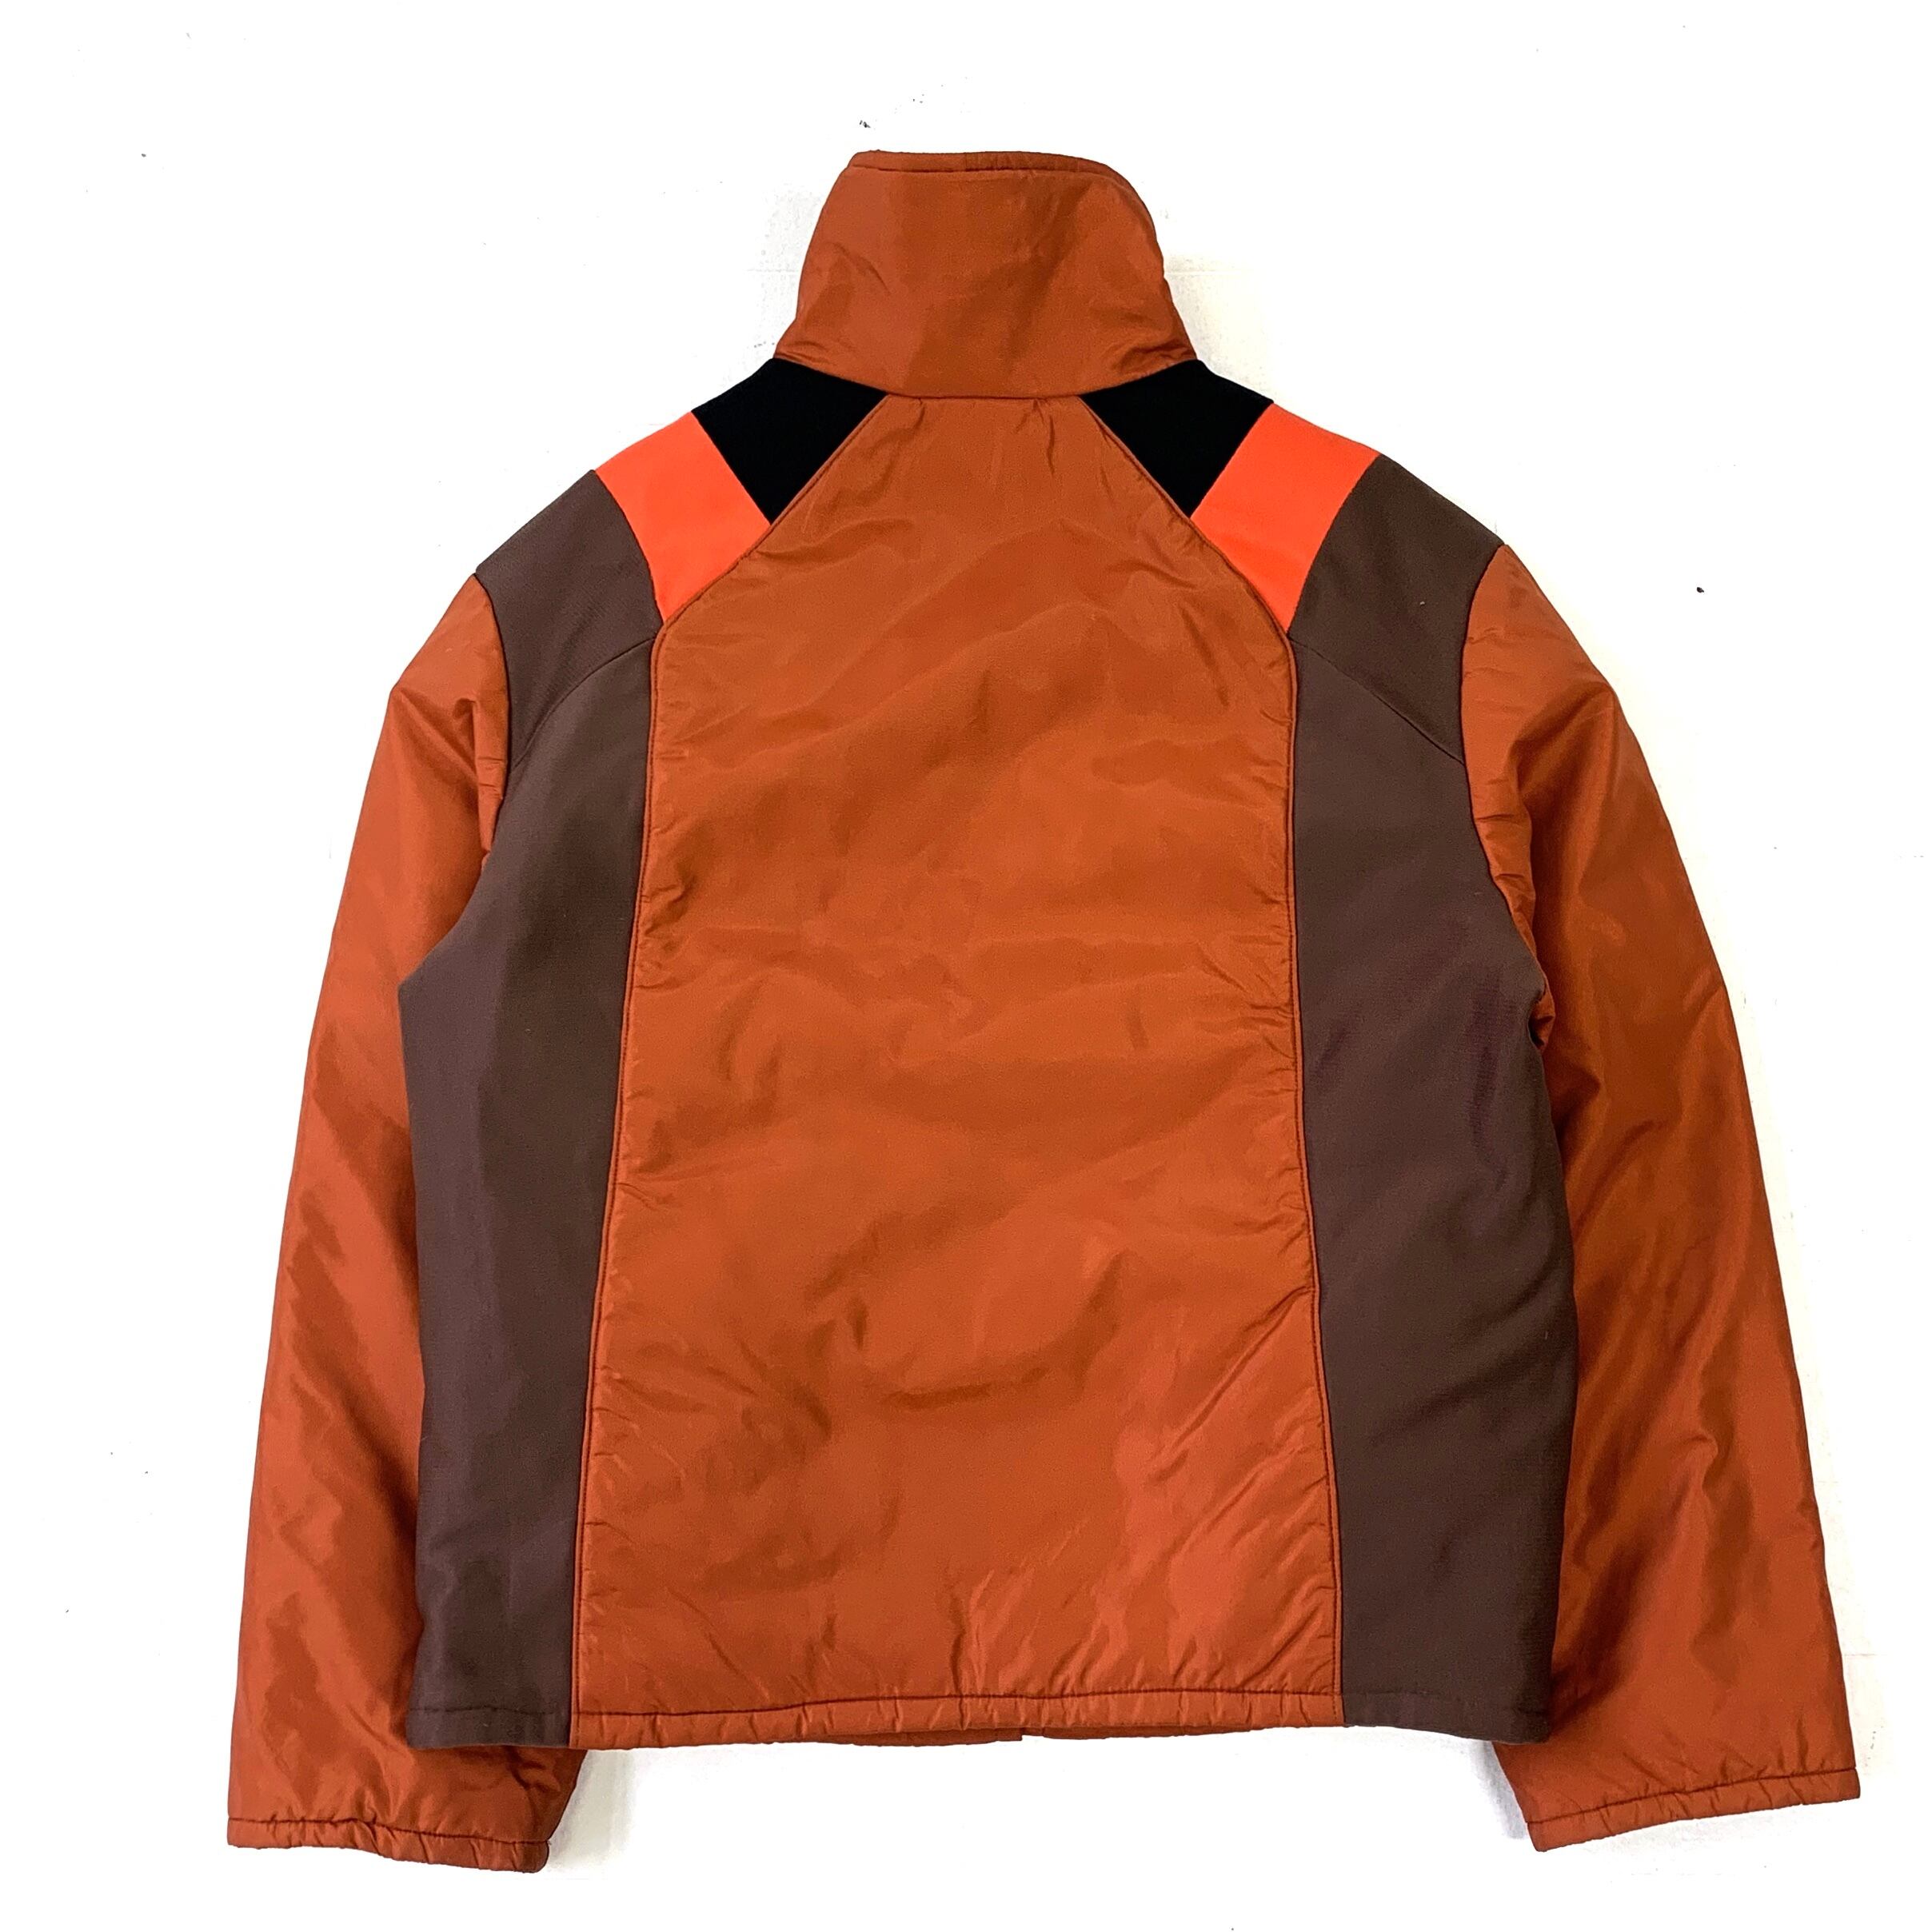 1970's frostline kit down jacket オレンジ ダウン スキージャケット